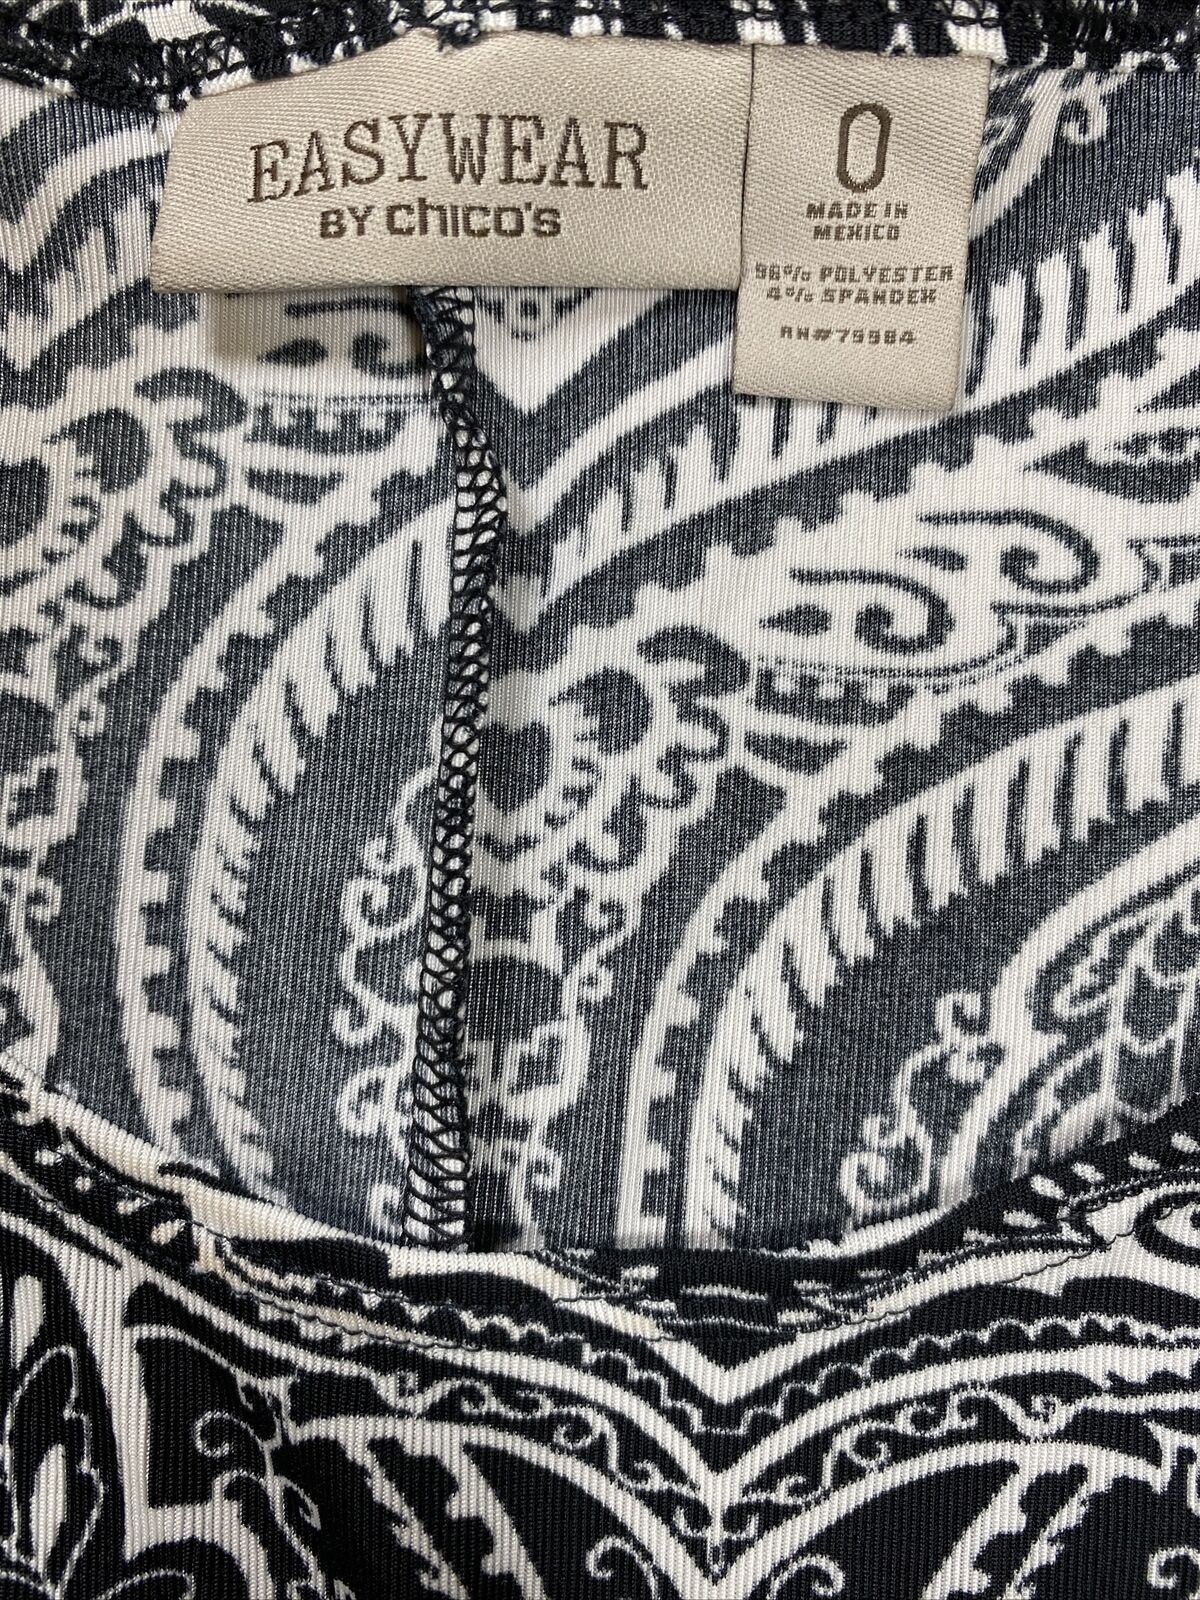 Easywear by Chico's Women's Black/White Sleeveless Shift Dress - 0 (US S)